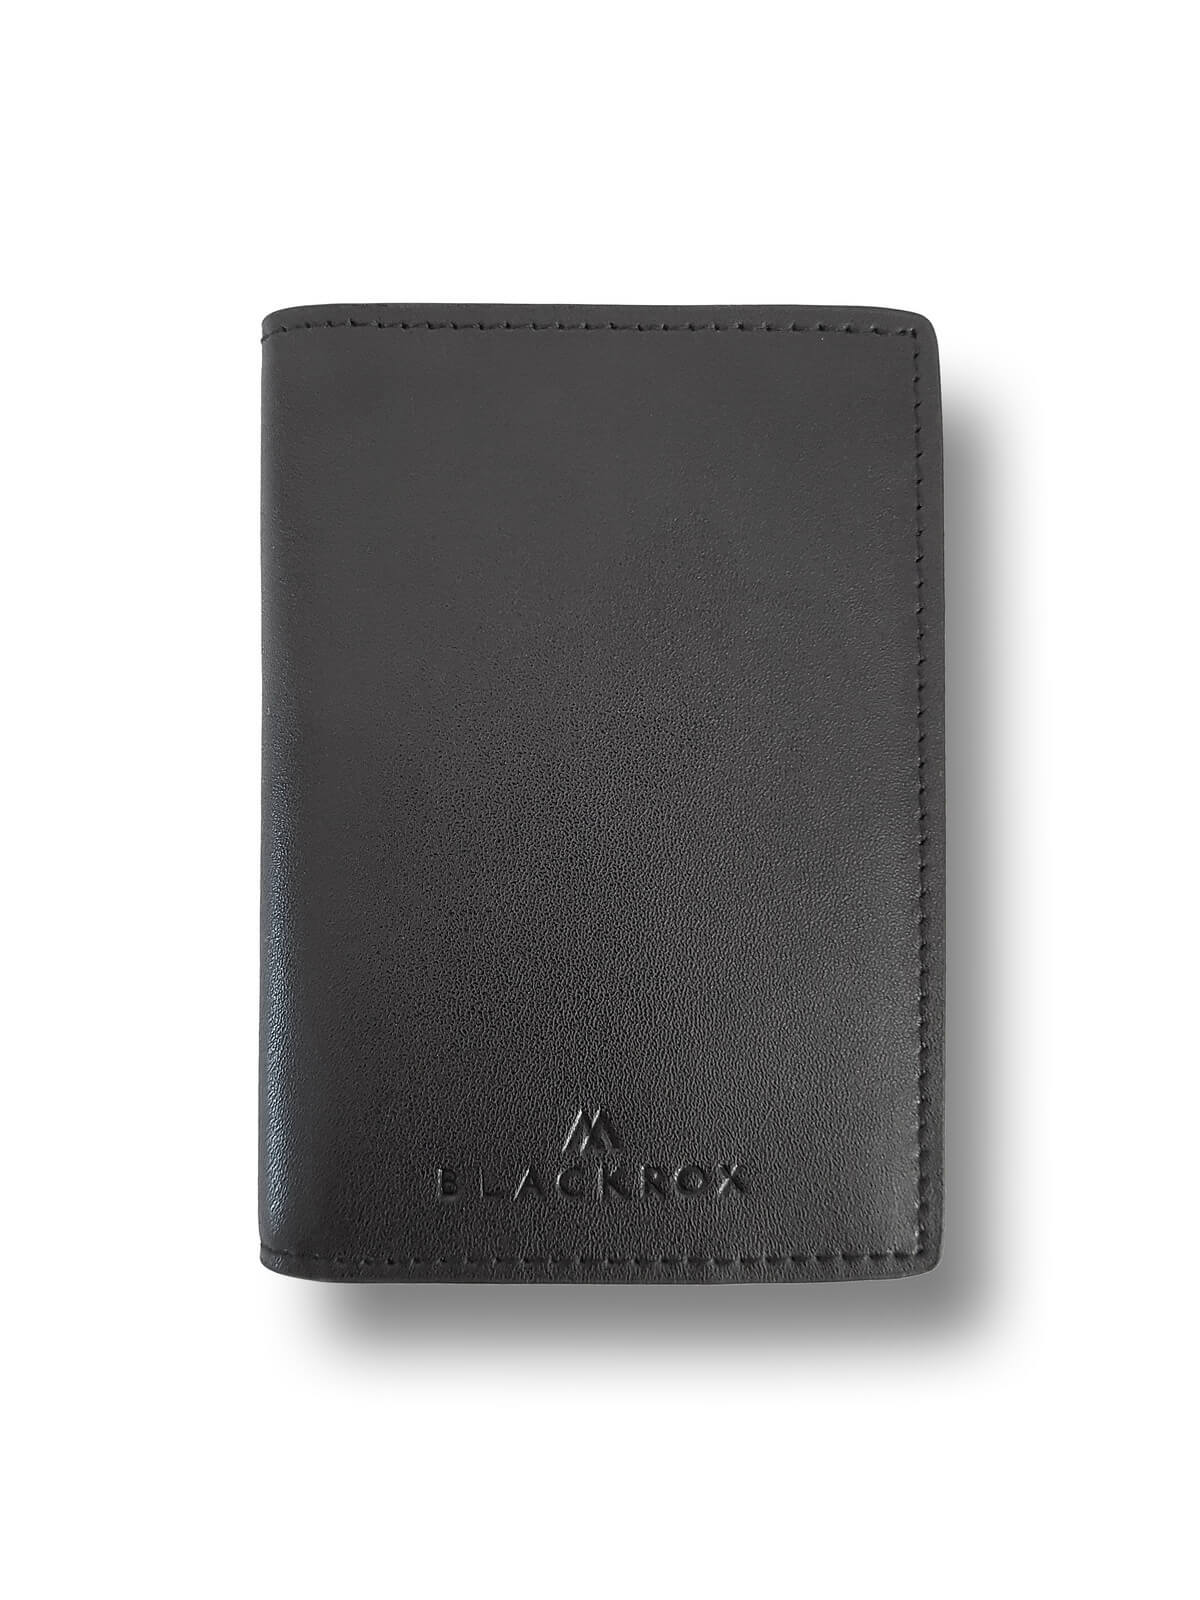 BLACKROX Kreditkartenetui echtes leder RFID Mini Geldbörse unser bestes  Produkt 2024